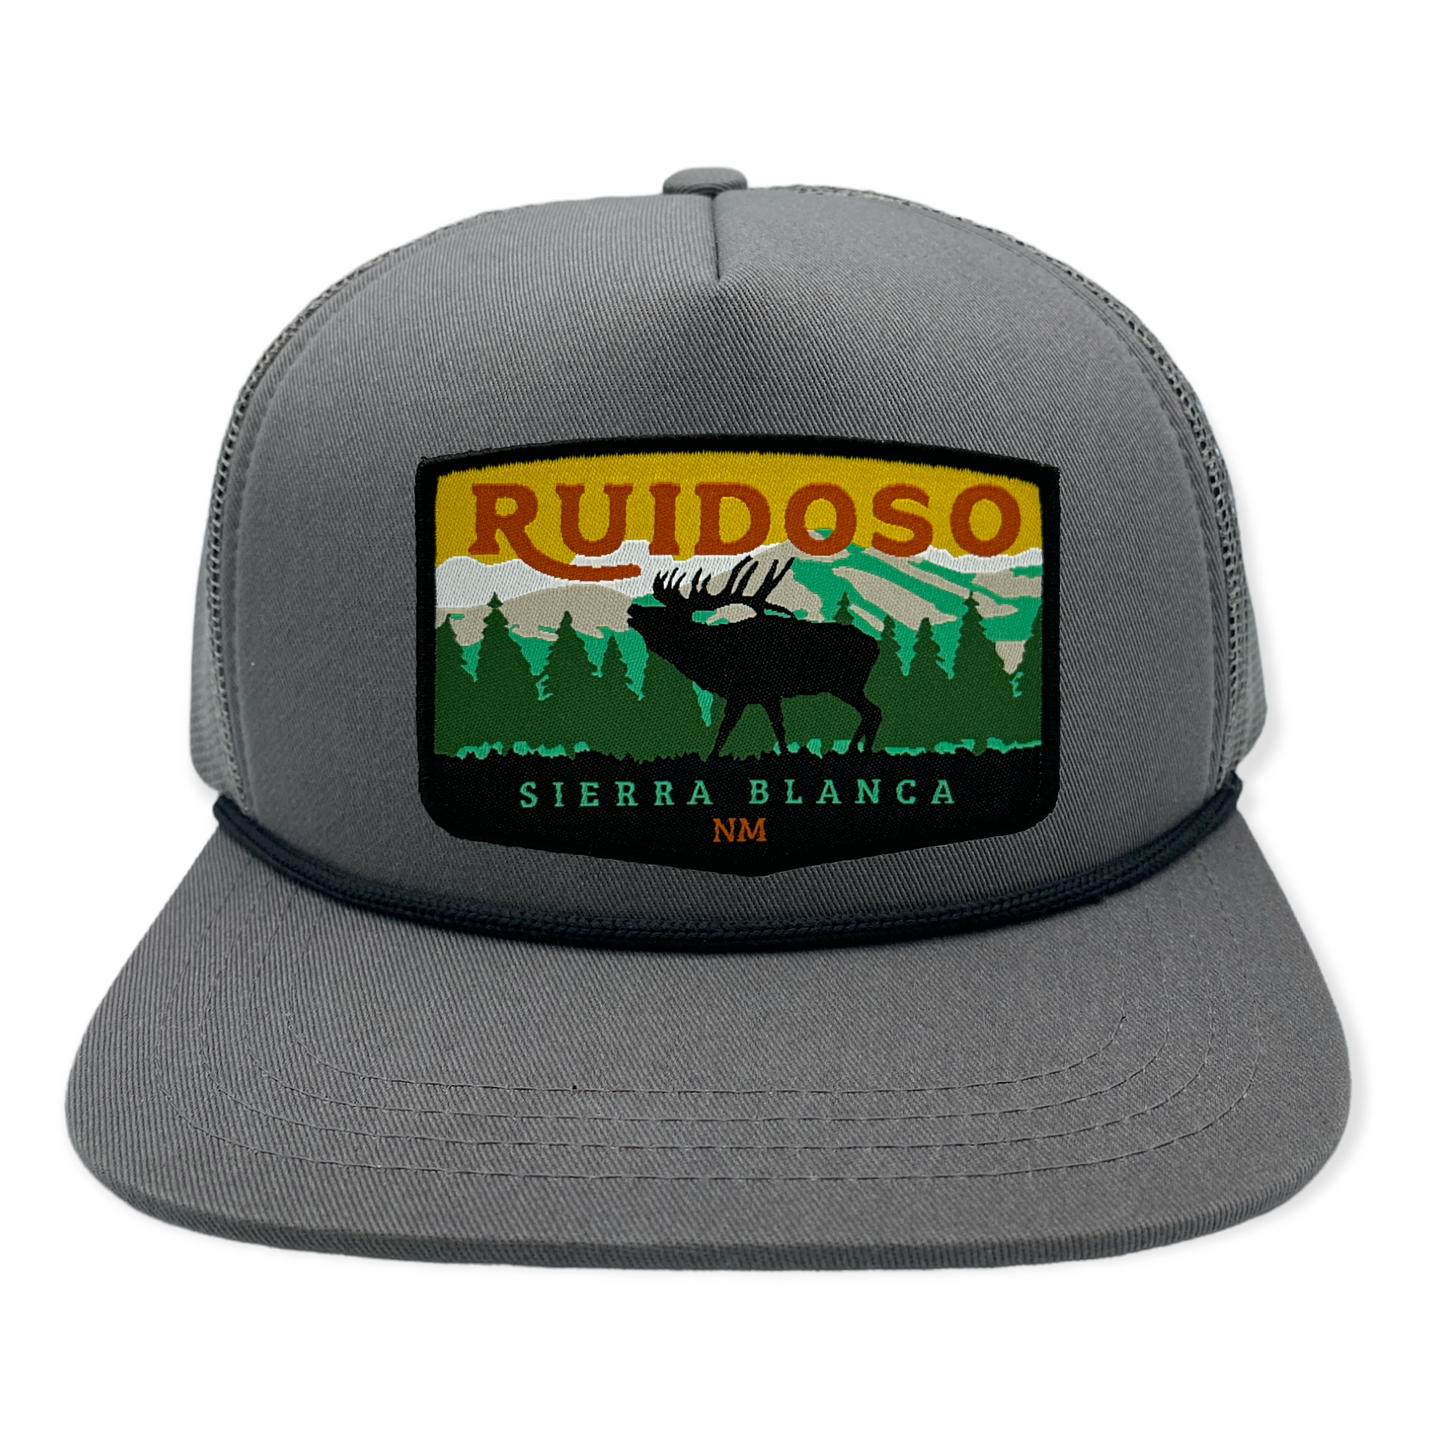 Ruidoso, NM Trucker